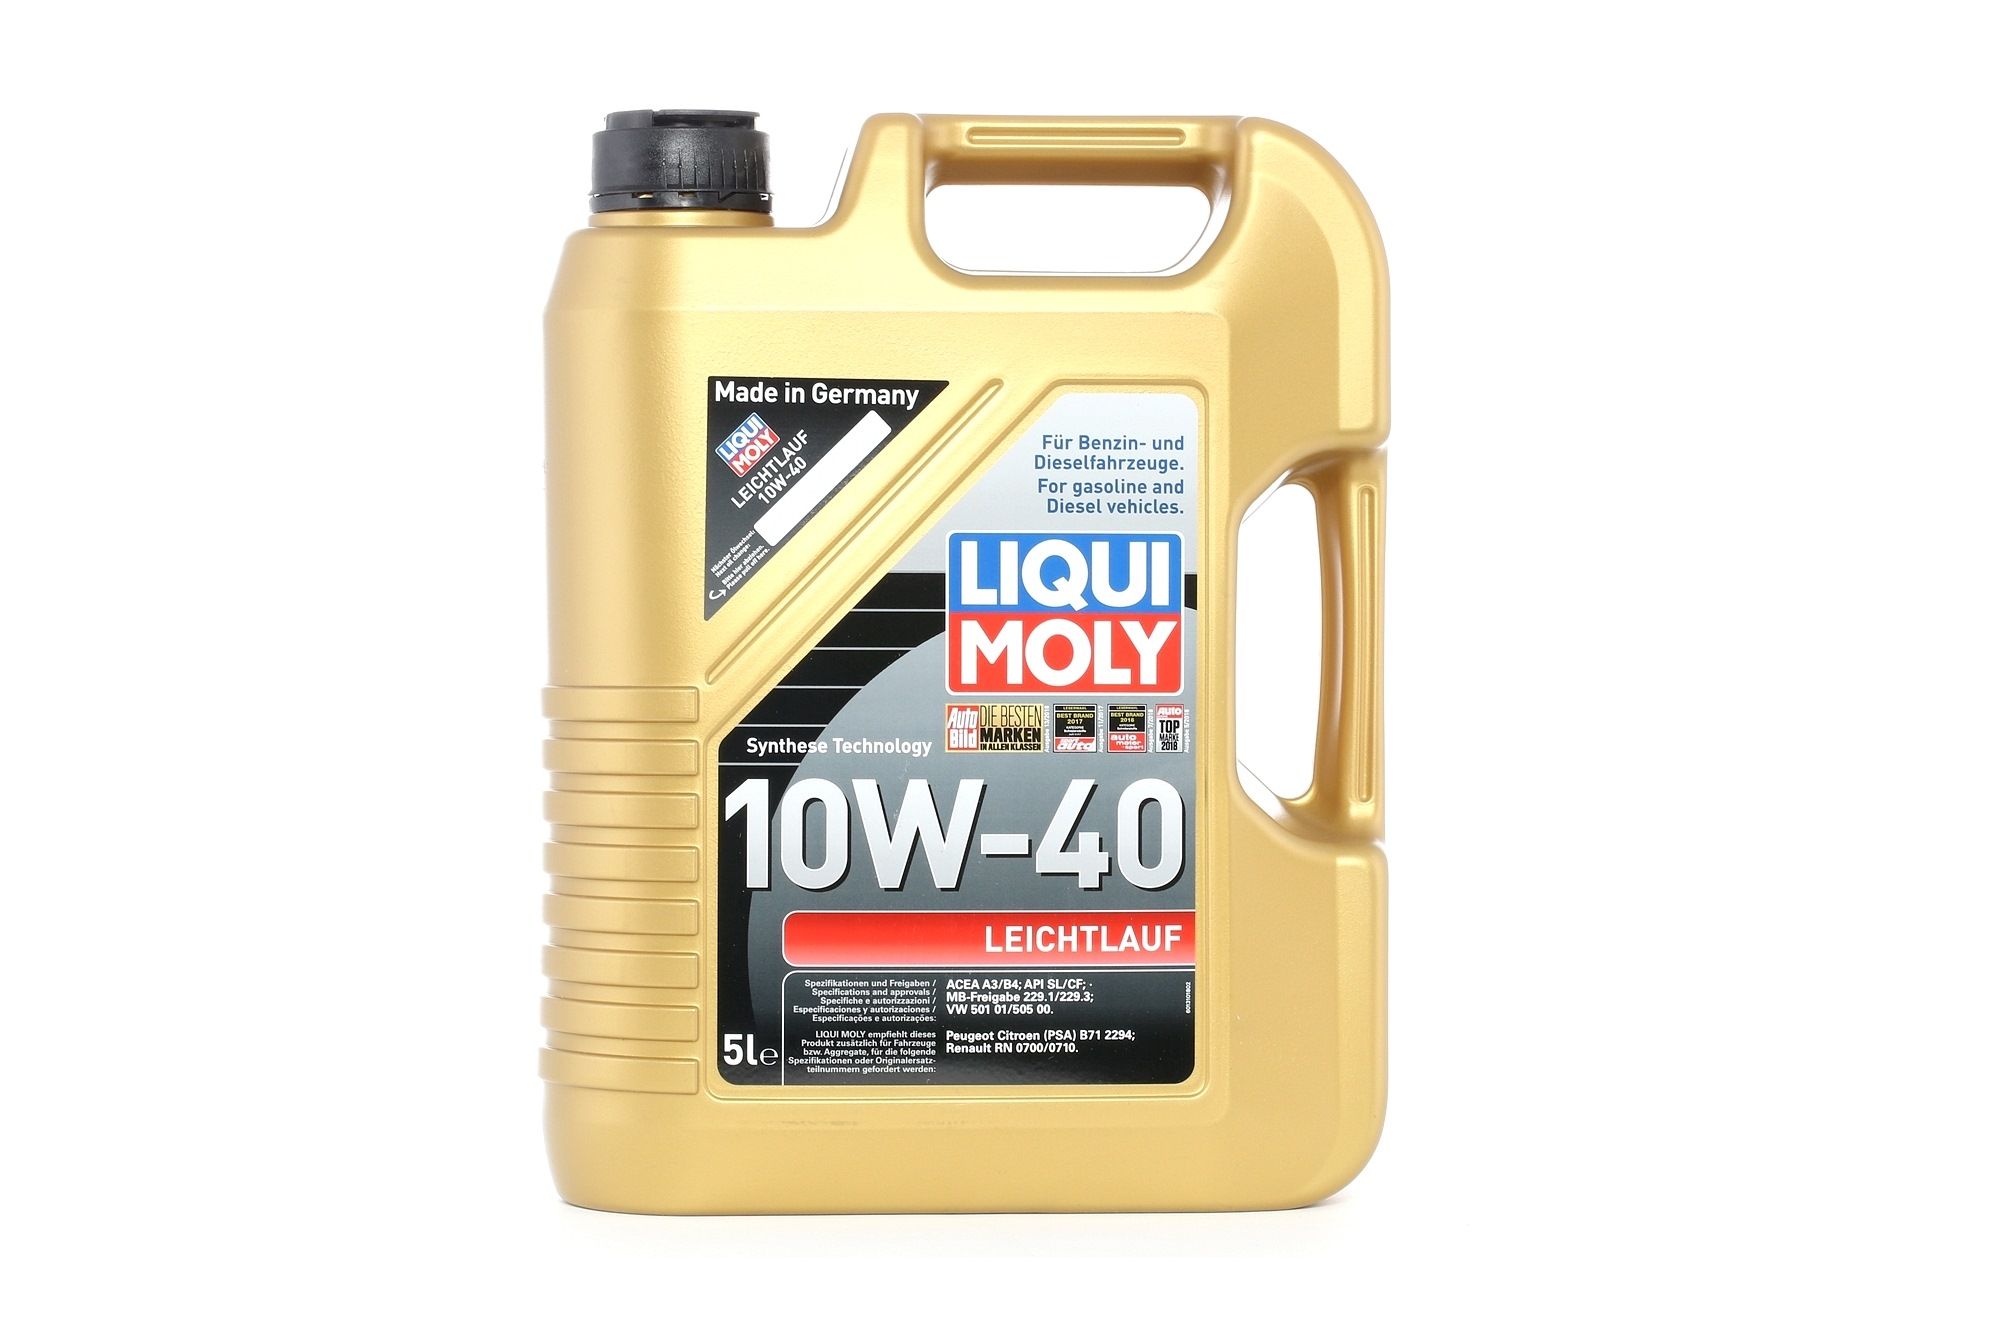 Motoröl LIQUI MOLY Leichtlauf 10W-40, Inhalt: 5l (1310)